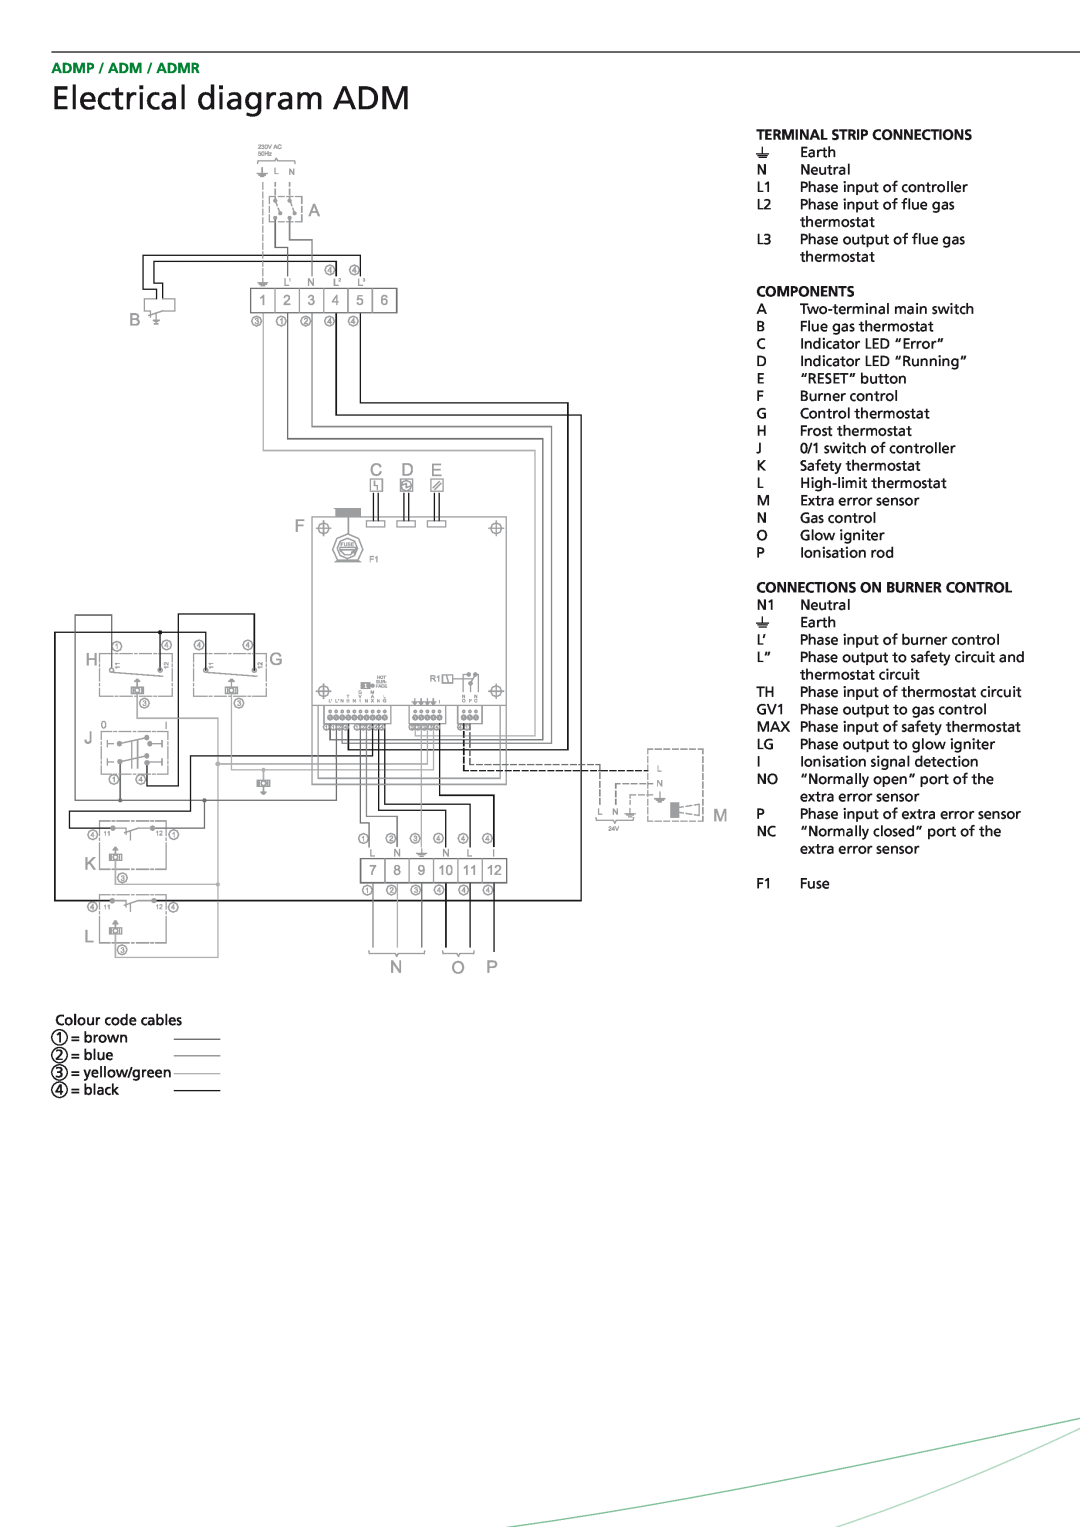 A.O. Smith ADMR - 135, ADMR - 80 manual Electrical diagram ADM, Admp / Adm / Admr, Terminal Strip Connections, Components 